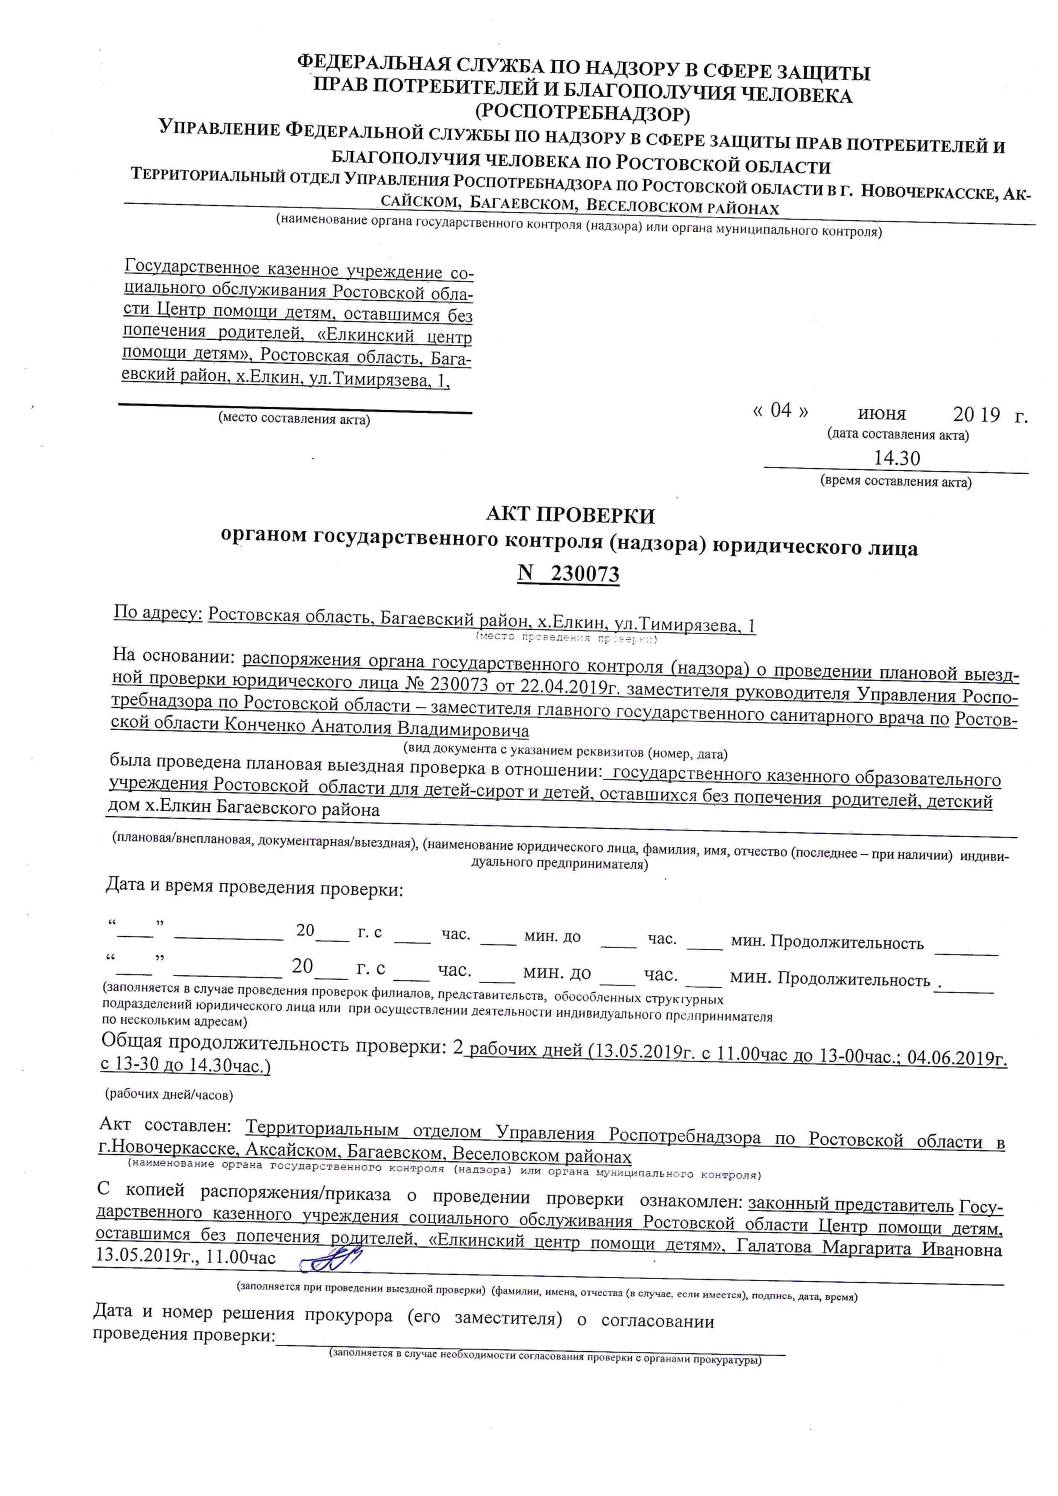 Акт проверки Роспотребнадзор № 230073 от 04.06.2019